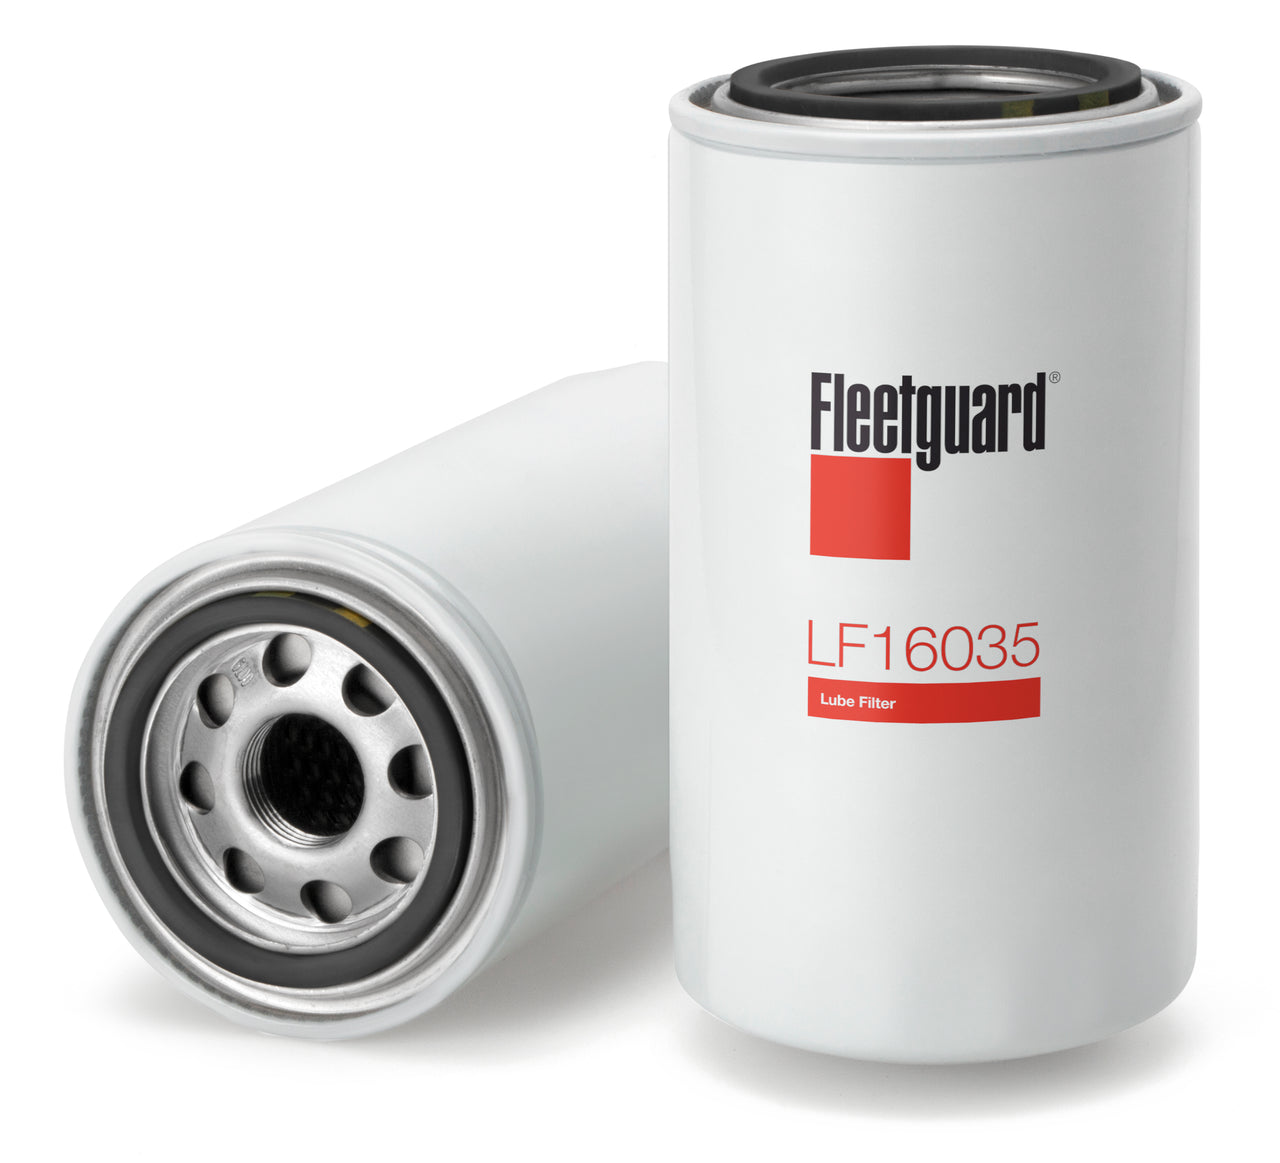 Fleetguard LF16035 Lube Filter